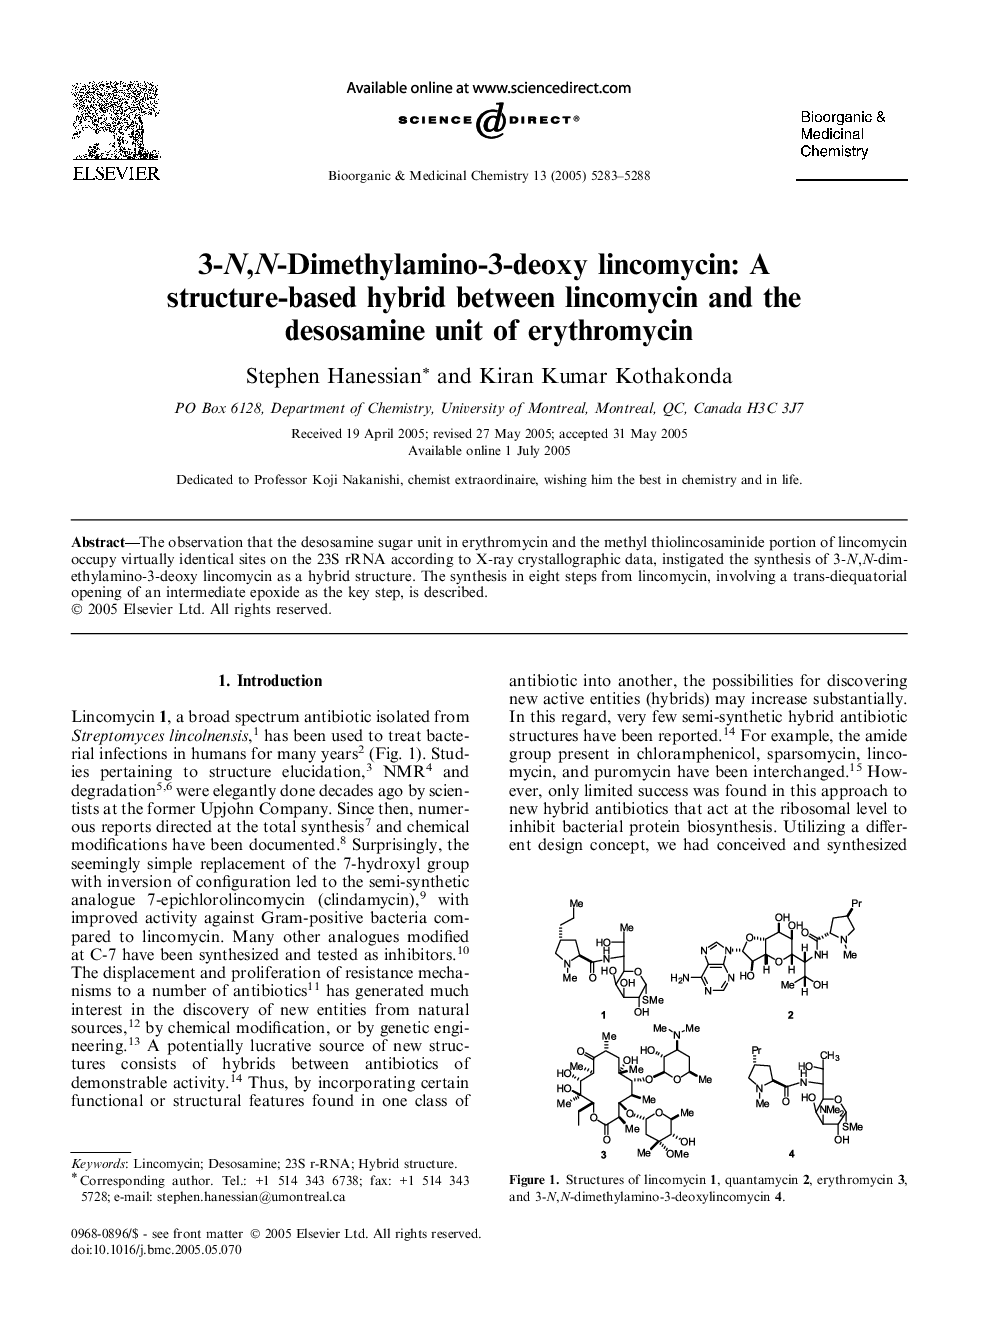 3-N,N-Dimethylamino-3-deoxy lincomycin: A structure-based hybrid between lincomycin and the desosamine unit of erythromycin